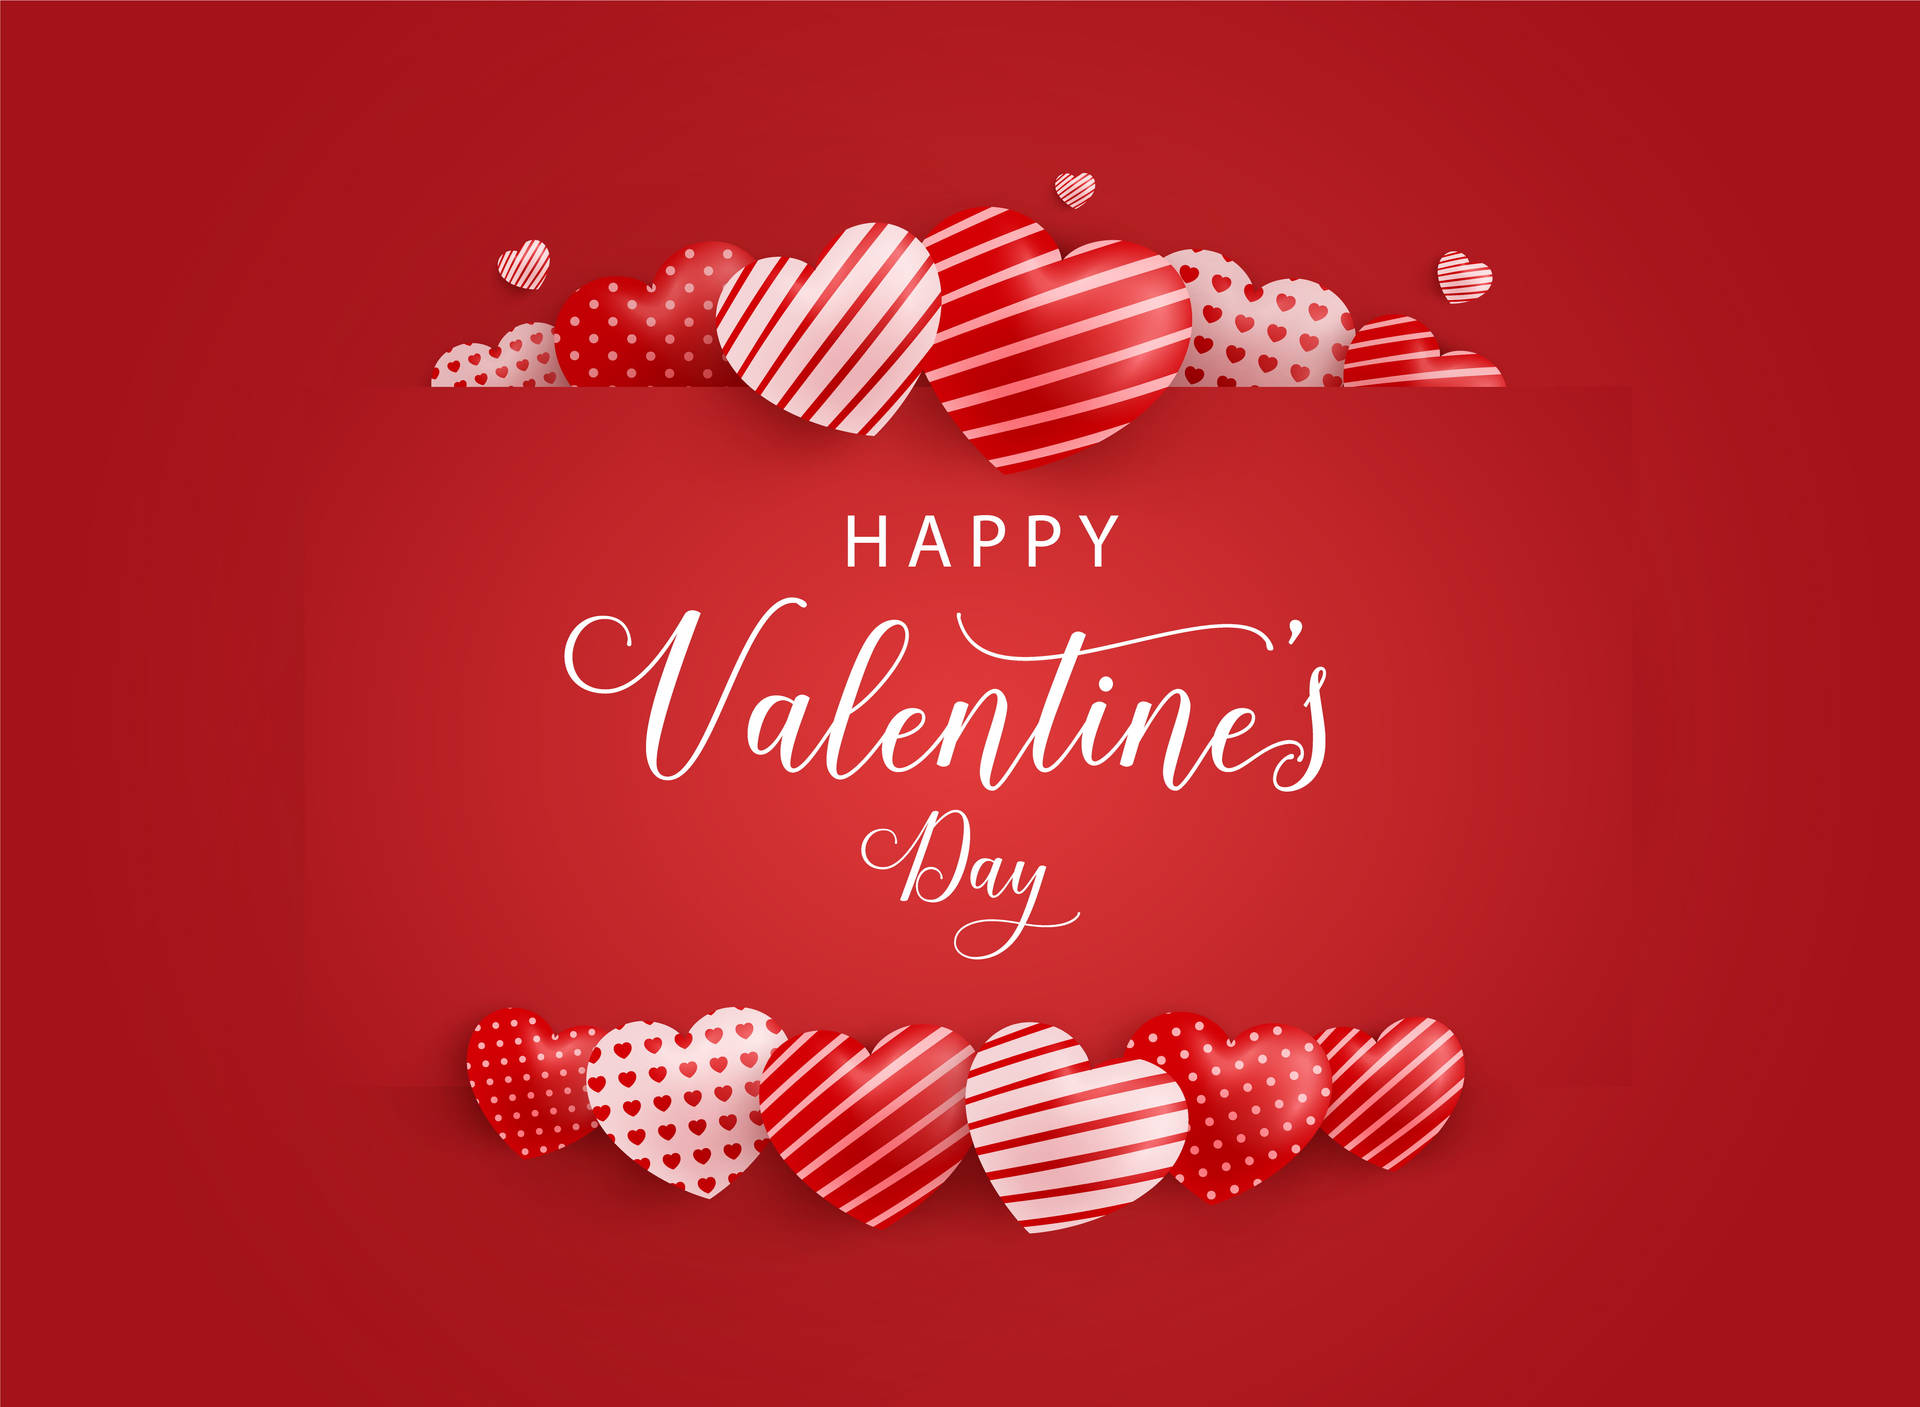 Free Happy Valentines Day Wallpaper Downloads, [100+] Happy Valentines Day  Wallpapers for FREE 